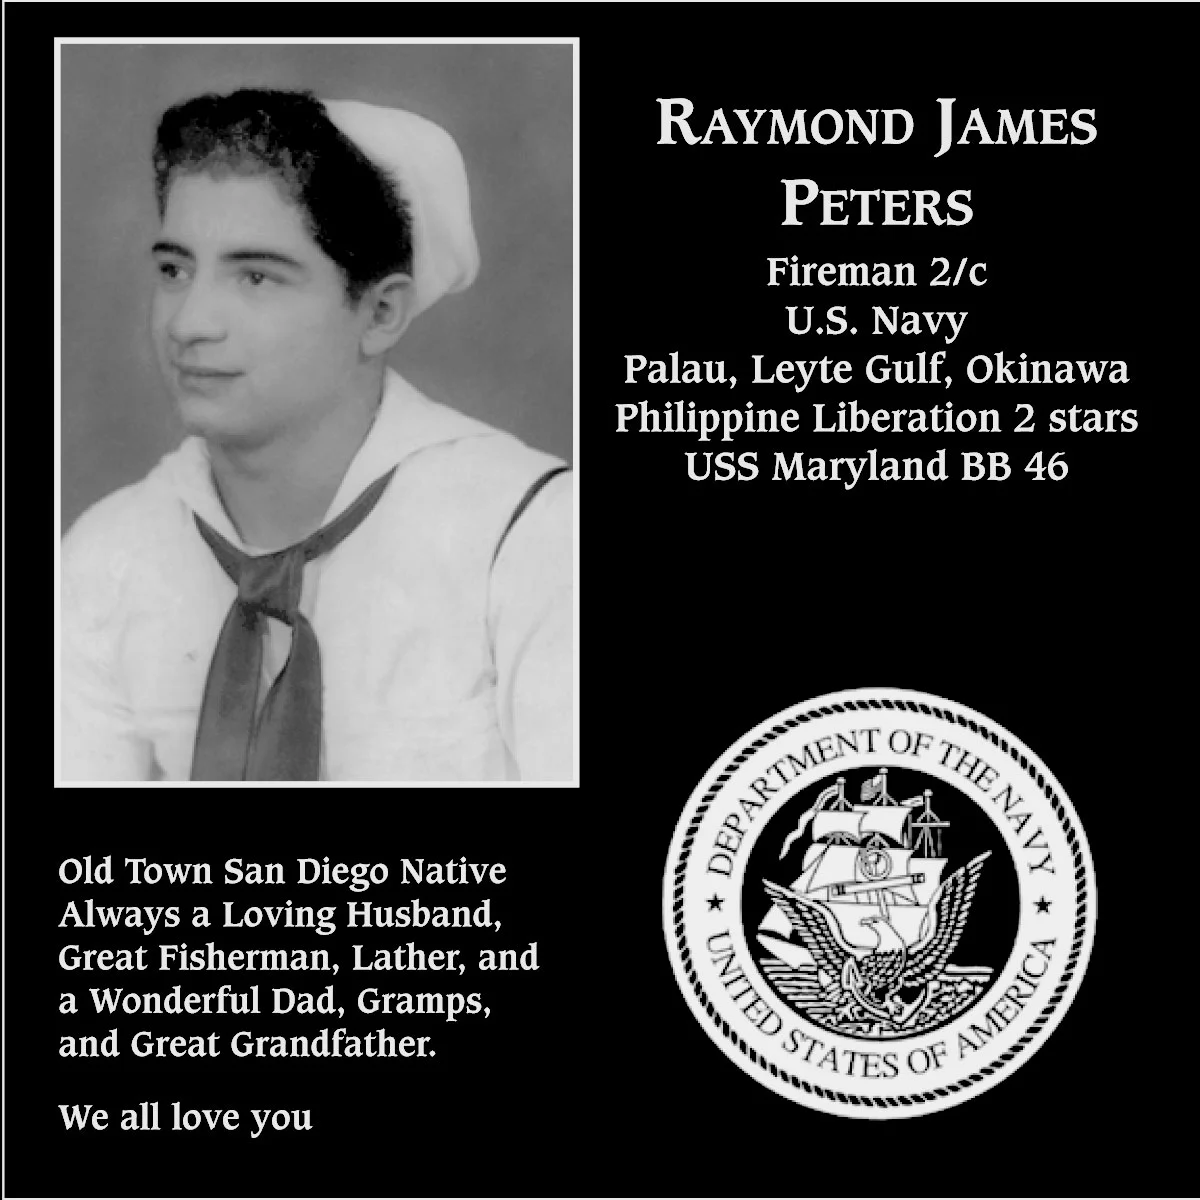 Raymond James Peters